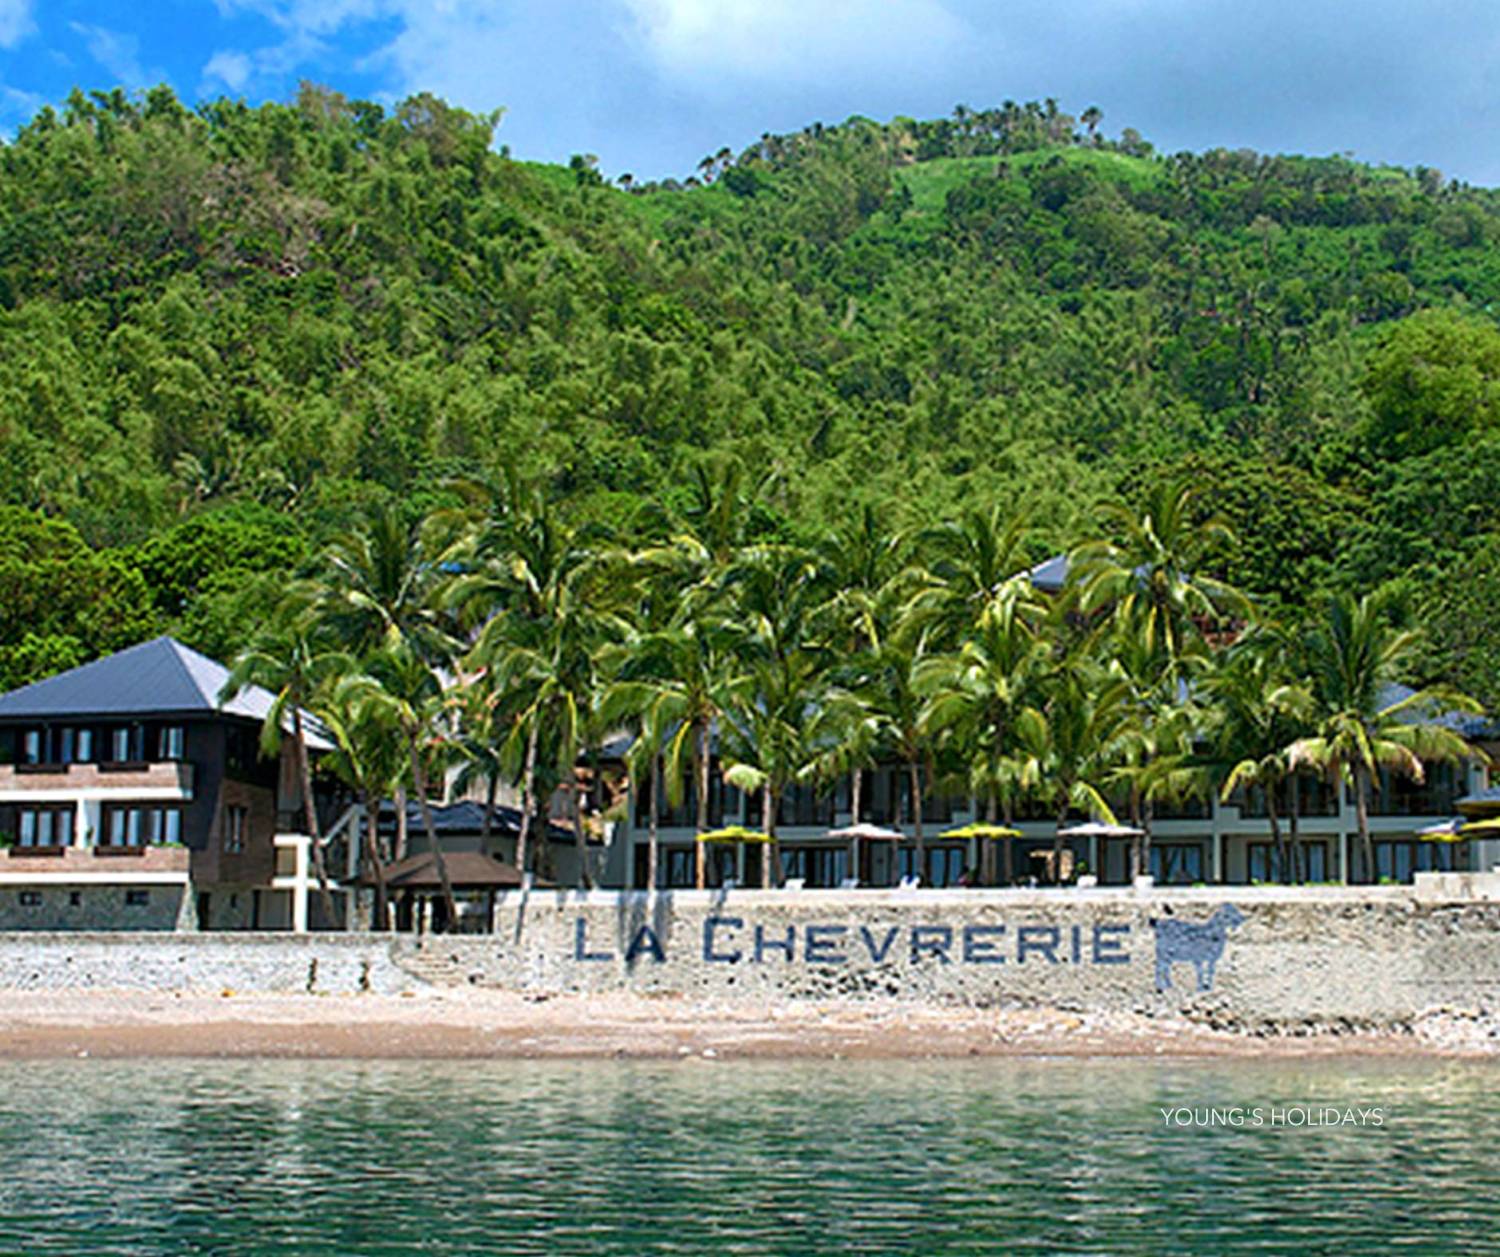 【Anilao】La Chevrerie Resort 5 days 4 nights diving package